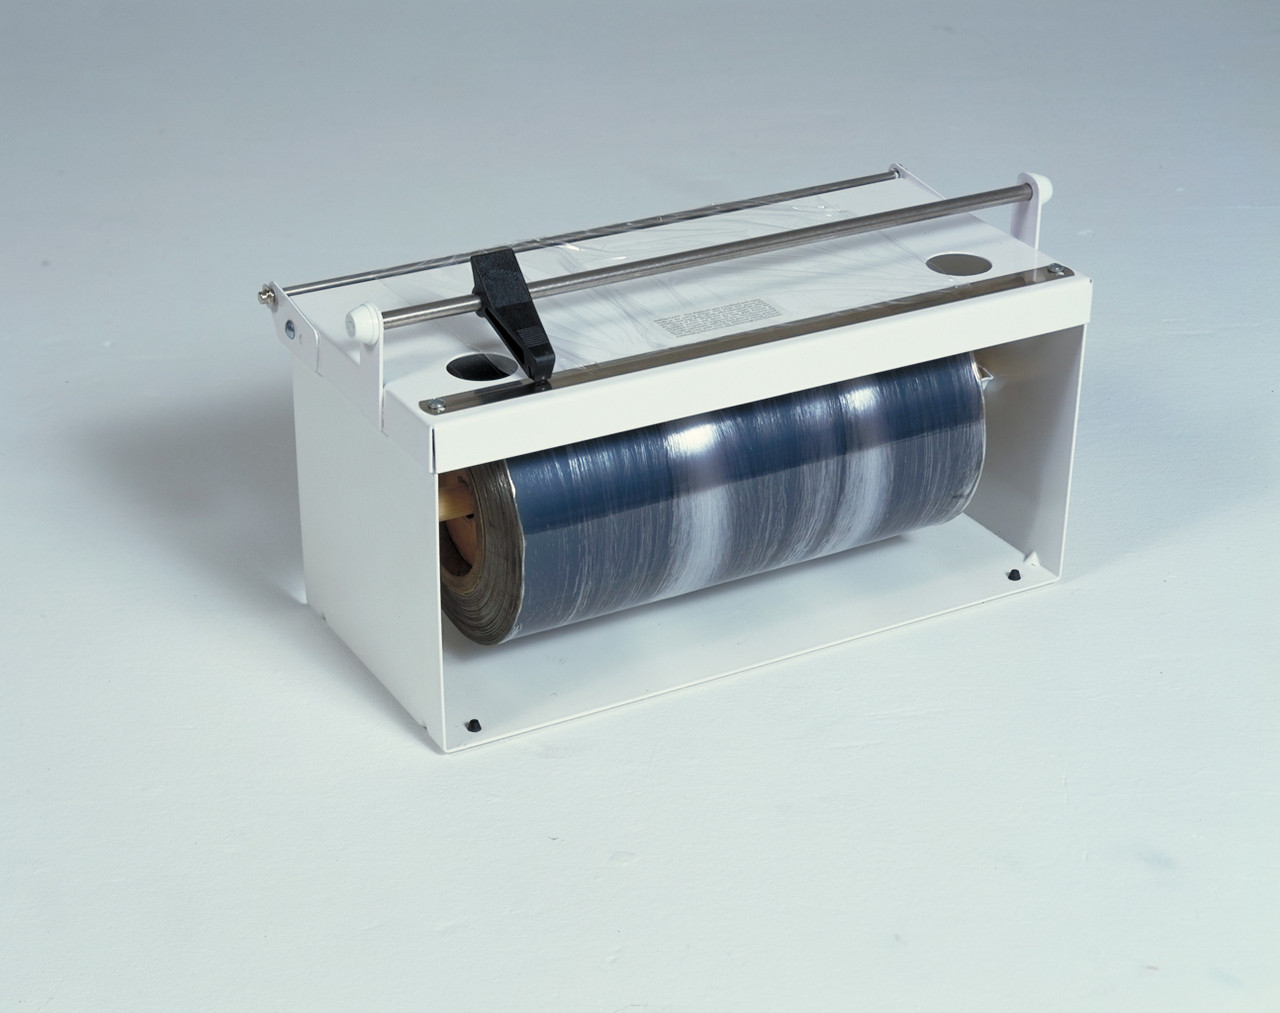 24 Plastic Wrap Food Dispenser Box with Slide Cutter